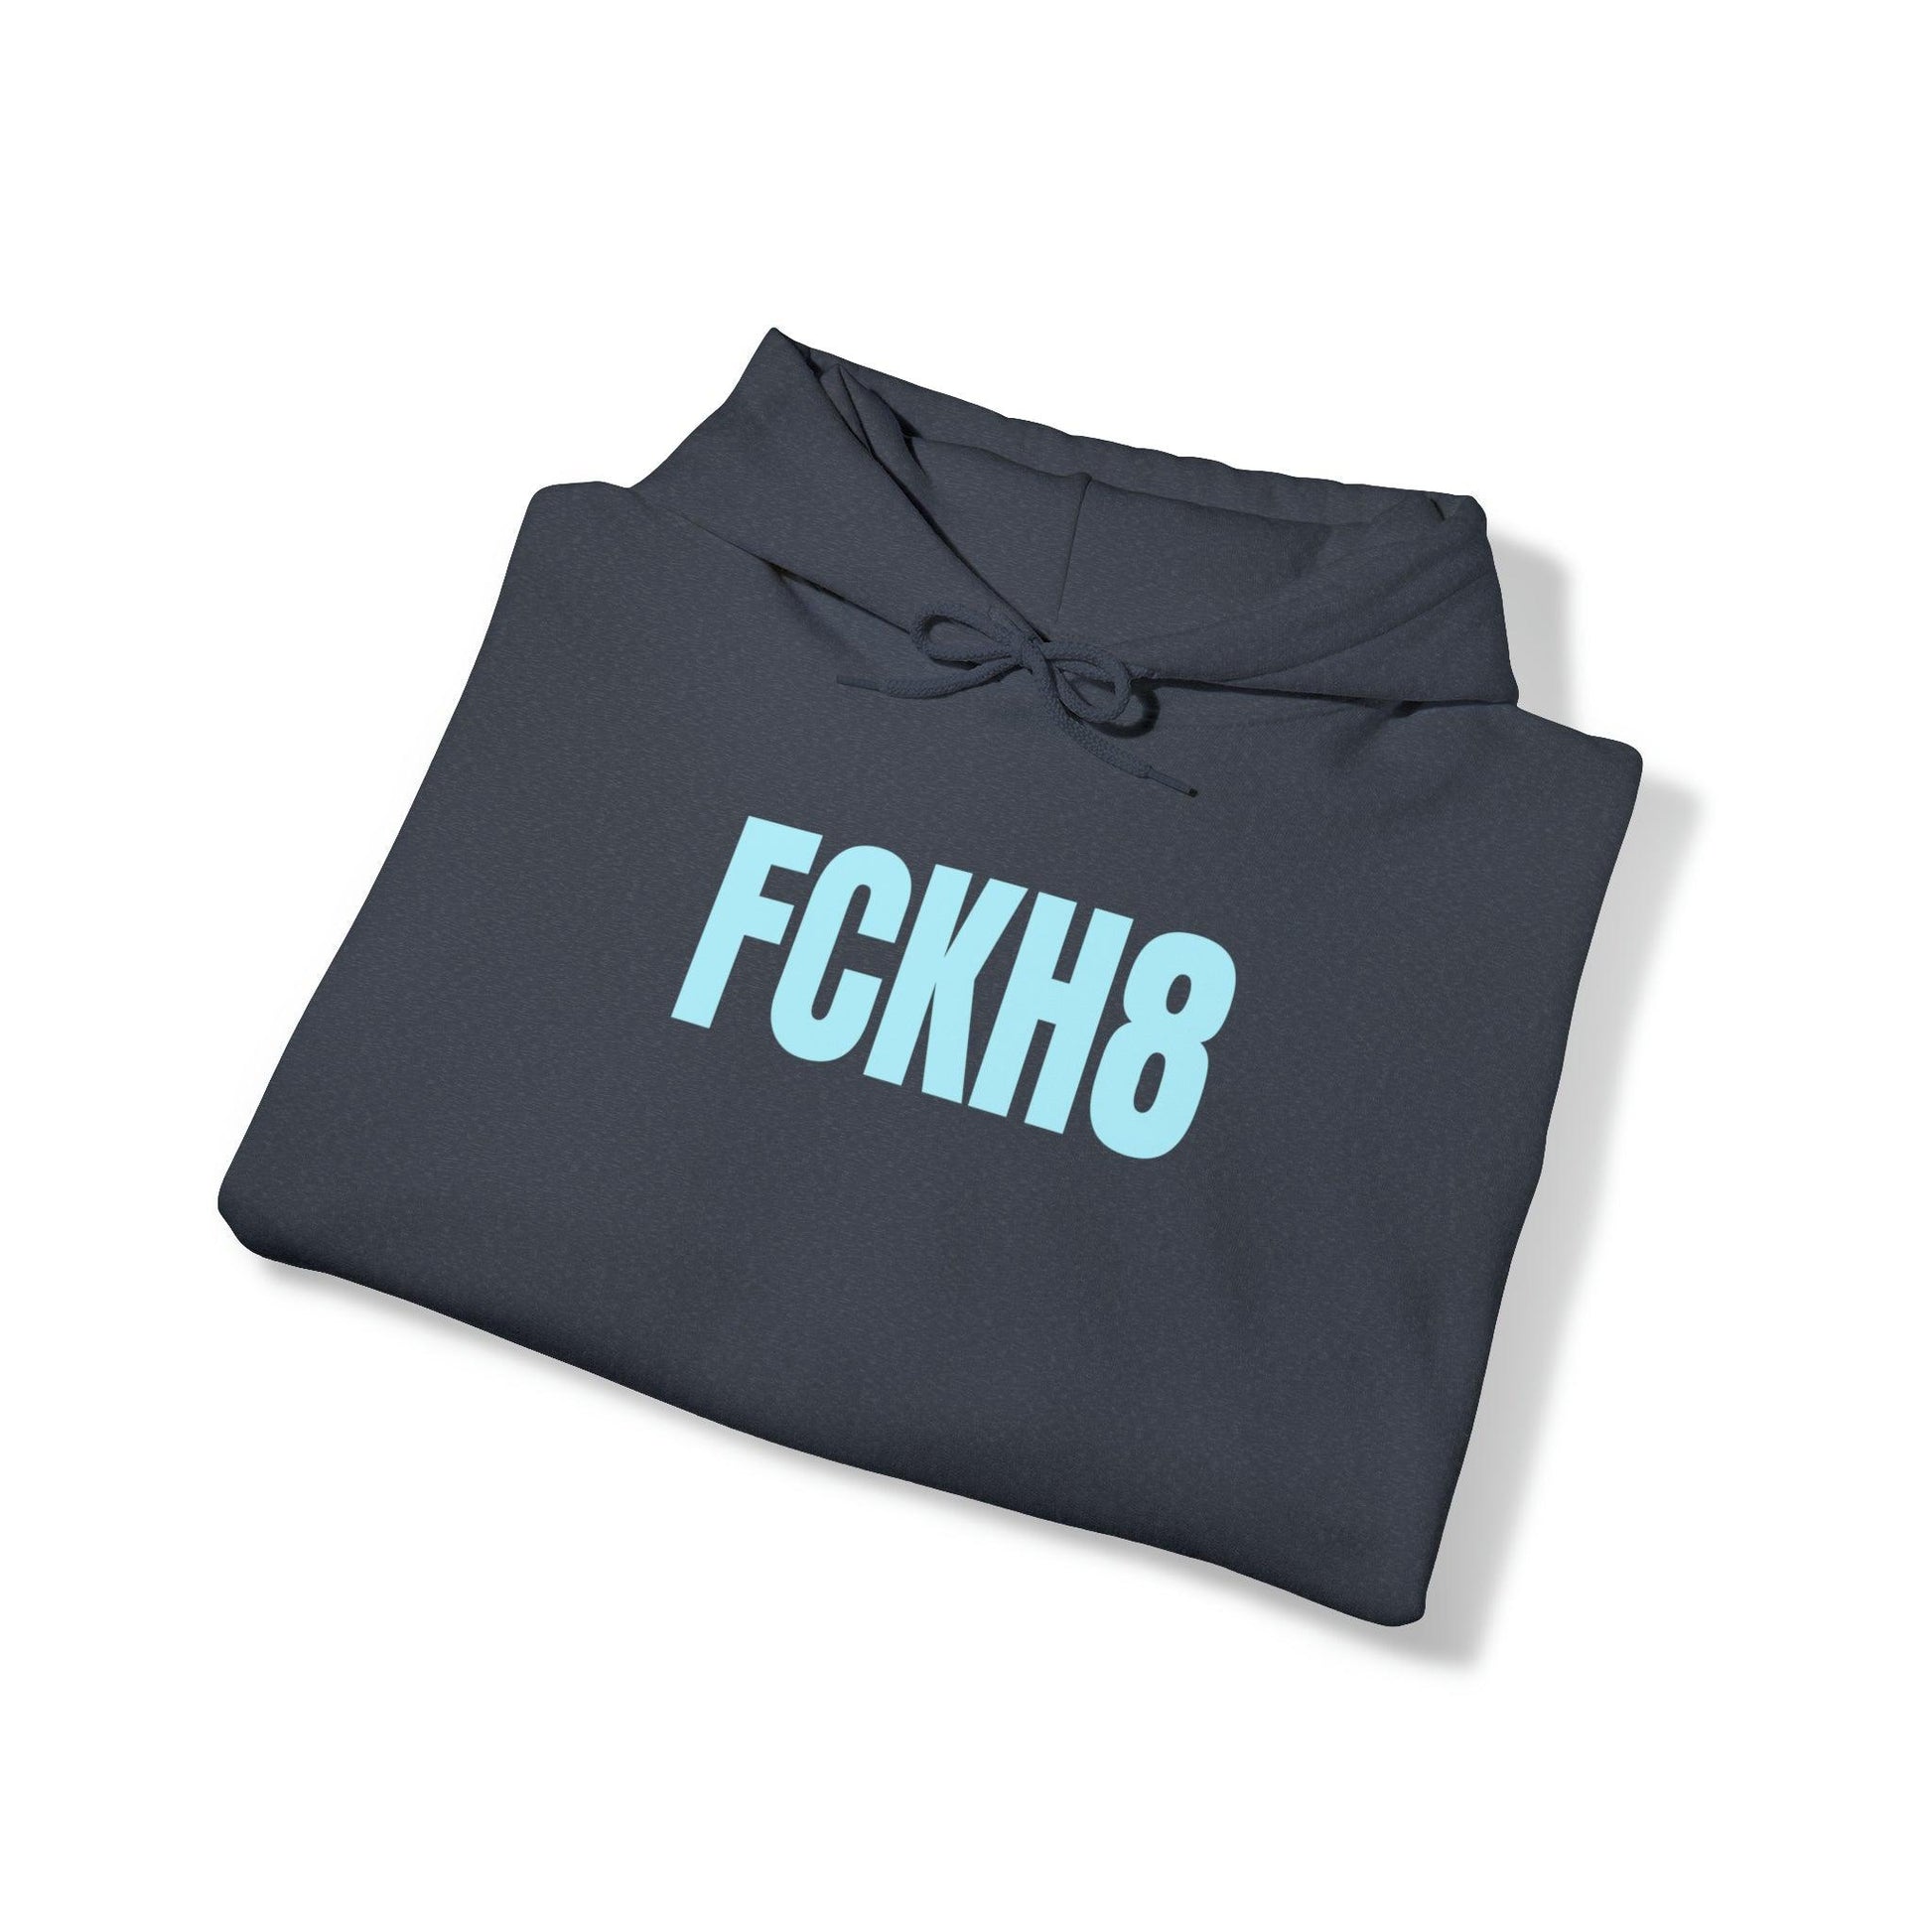 FCKH8 (Fuck Hate) Hoodie - Wicked Naughty Apparel